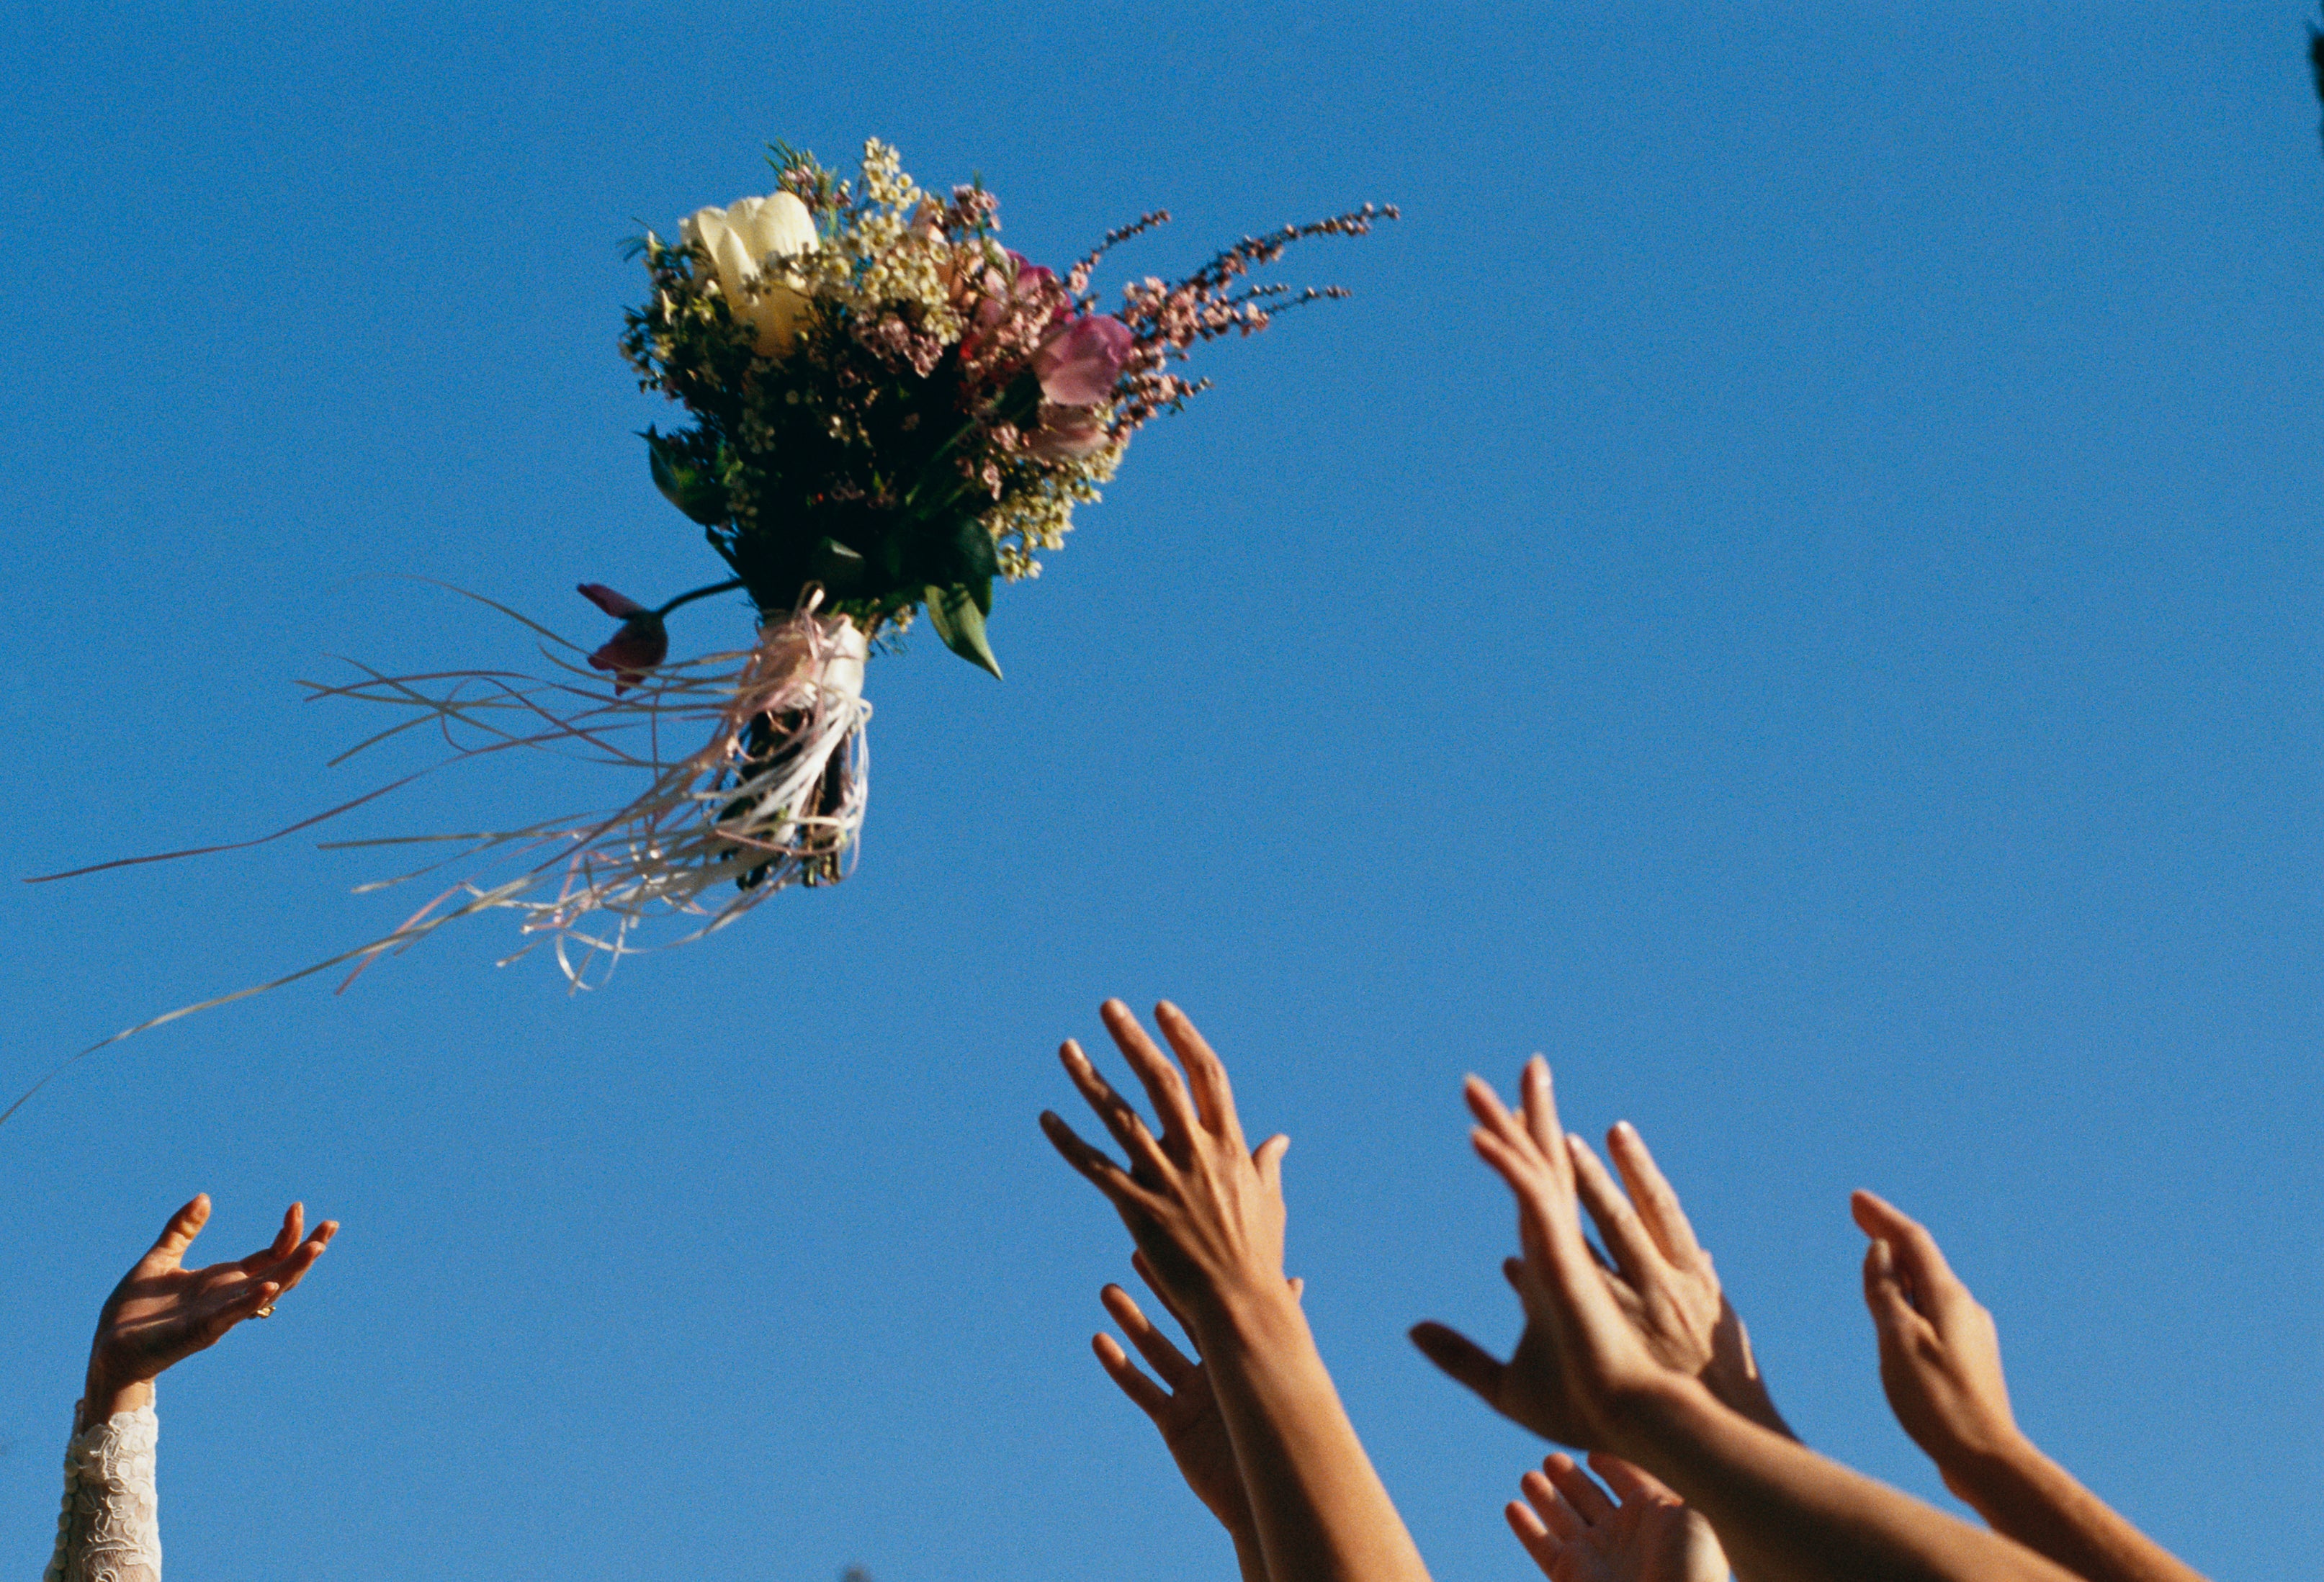 Hands reaching for wedding bouquet